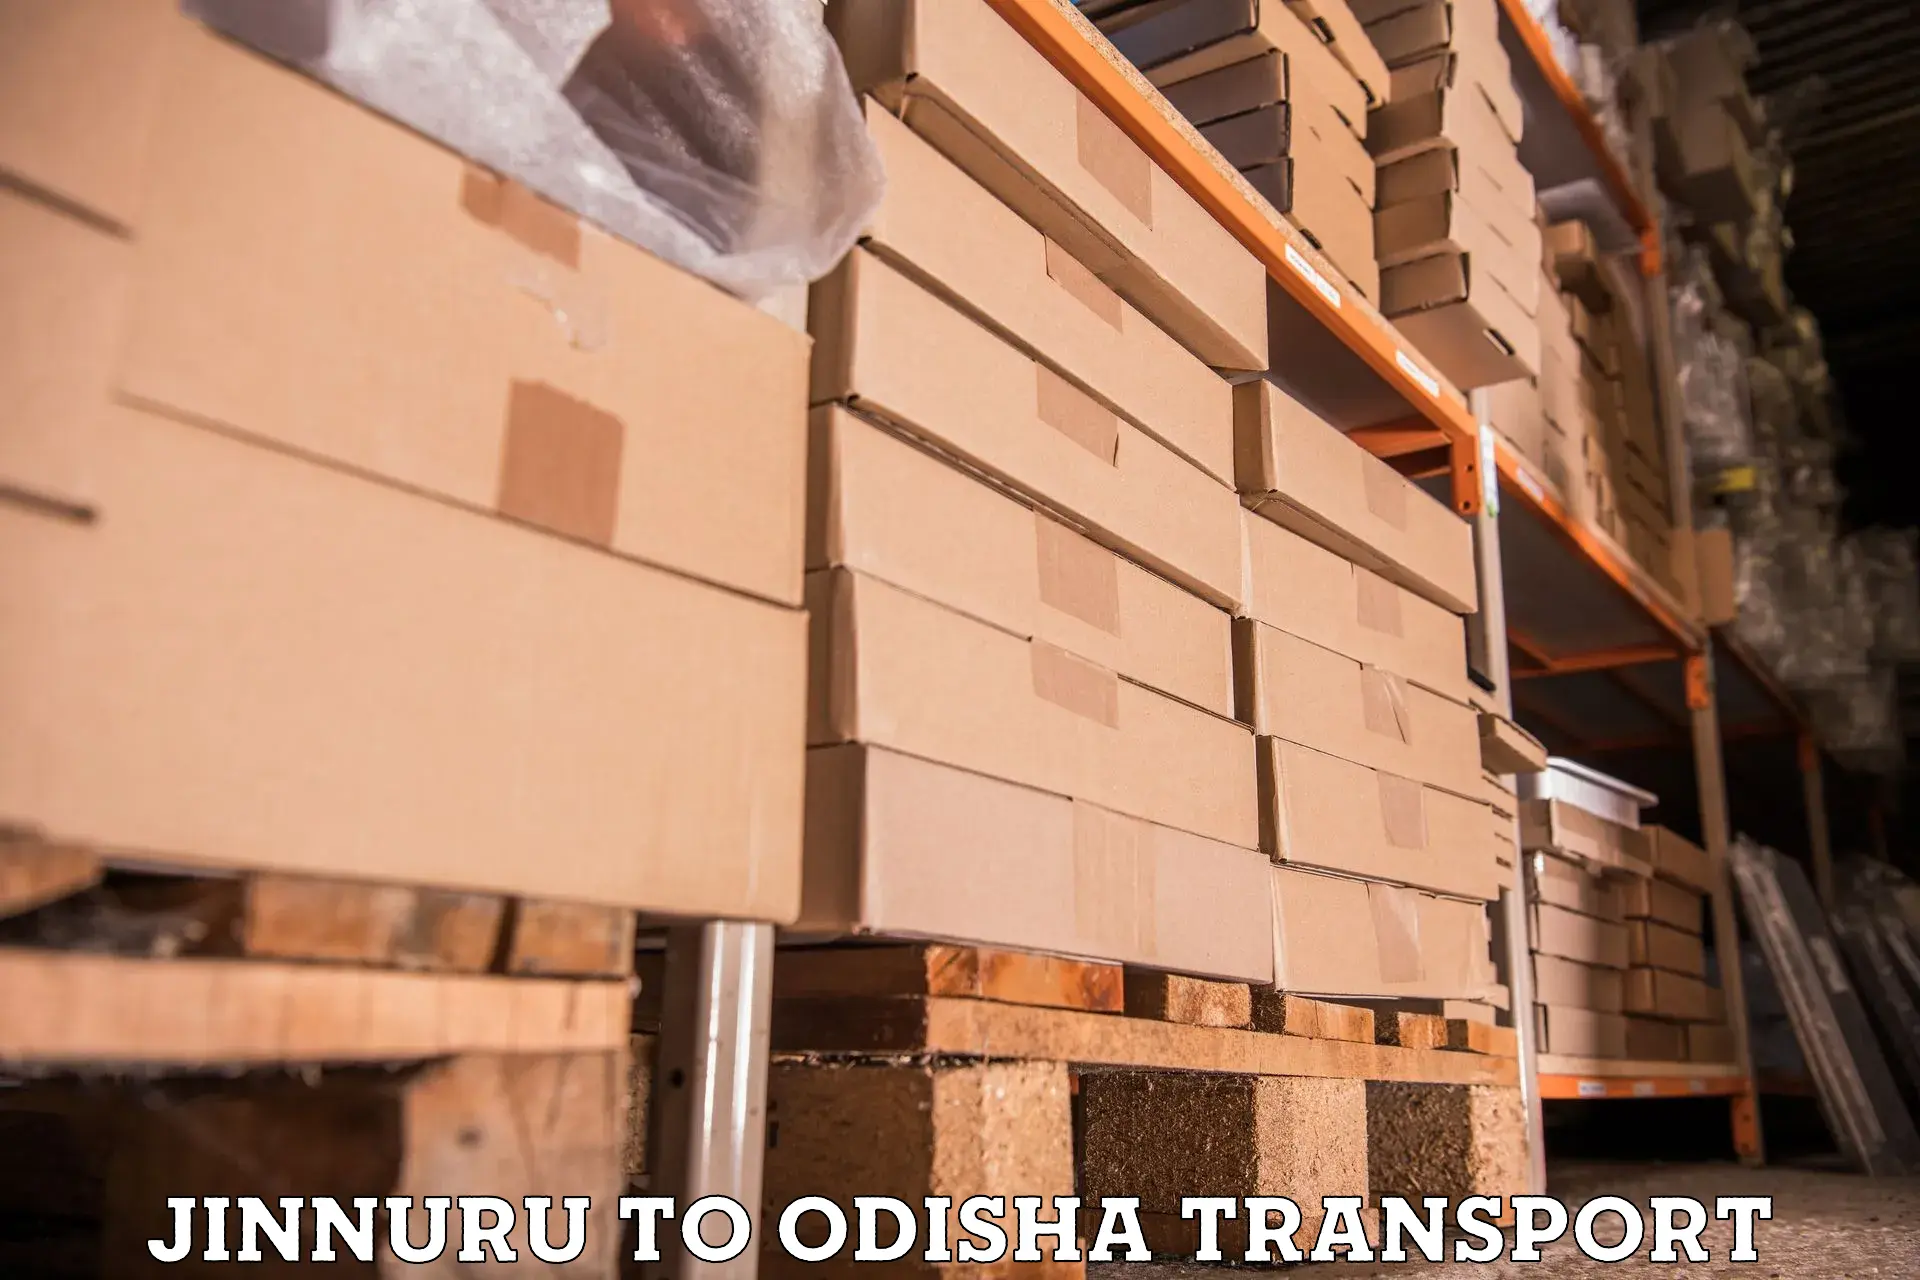 Furniture transport service Jinnuru to Kosagumuda